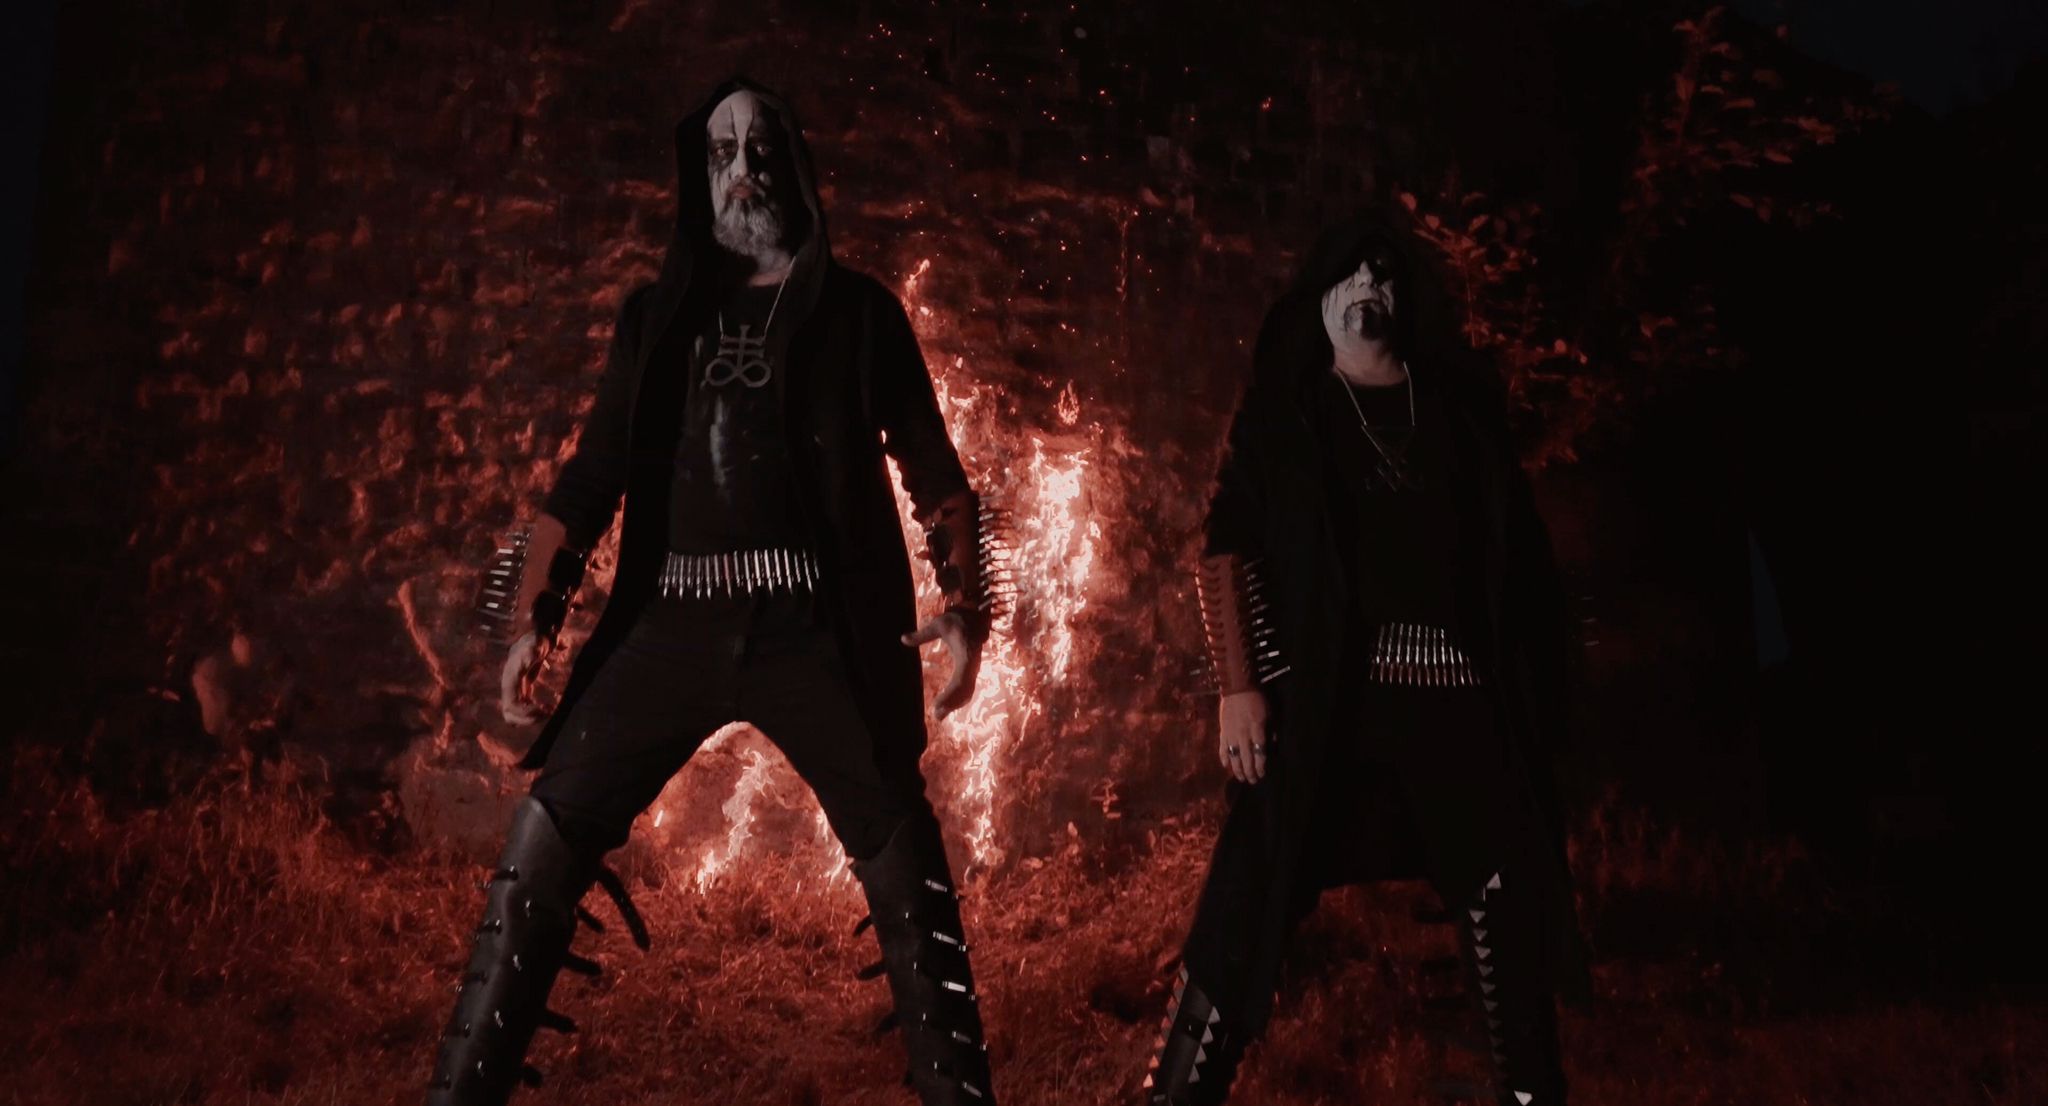 Possessed-Cover 'Death Metal' im Video